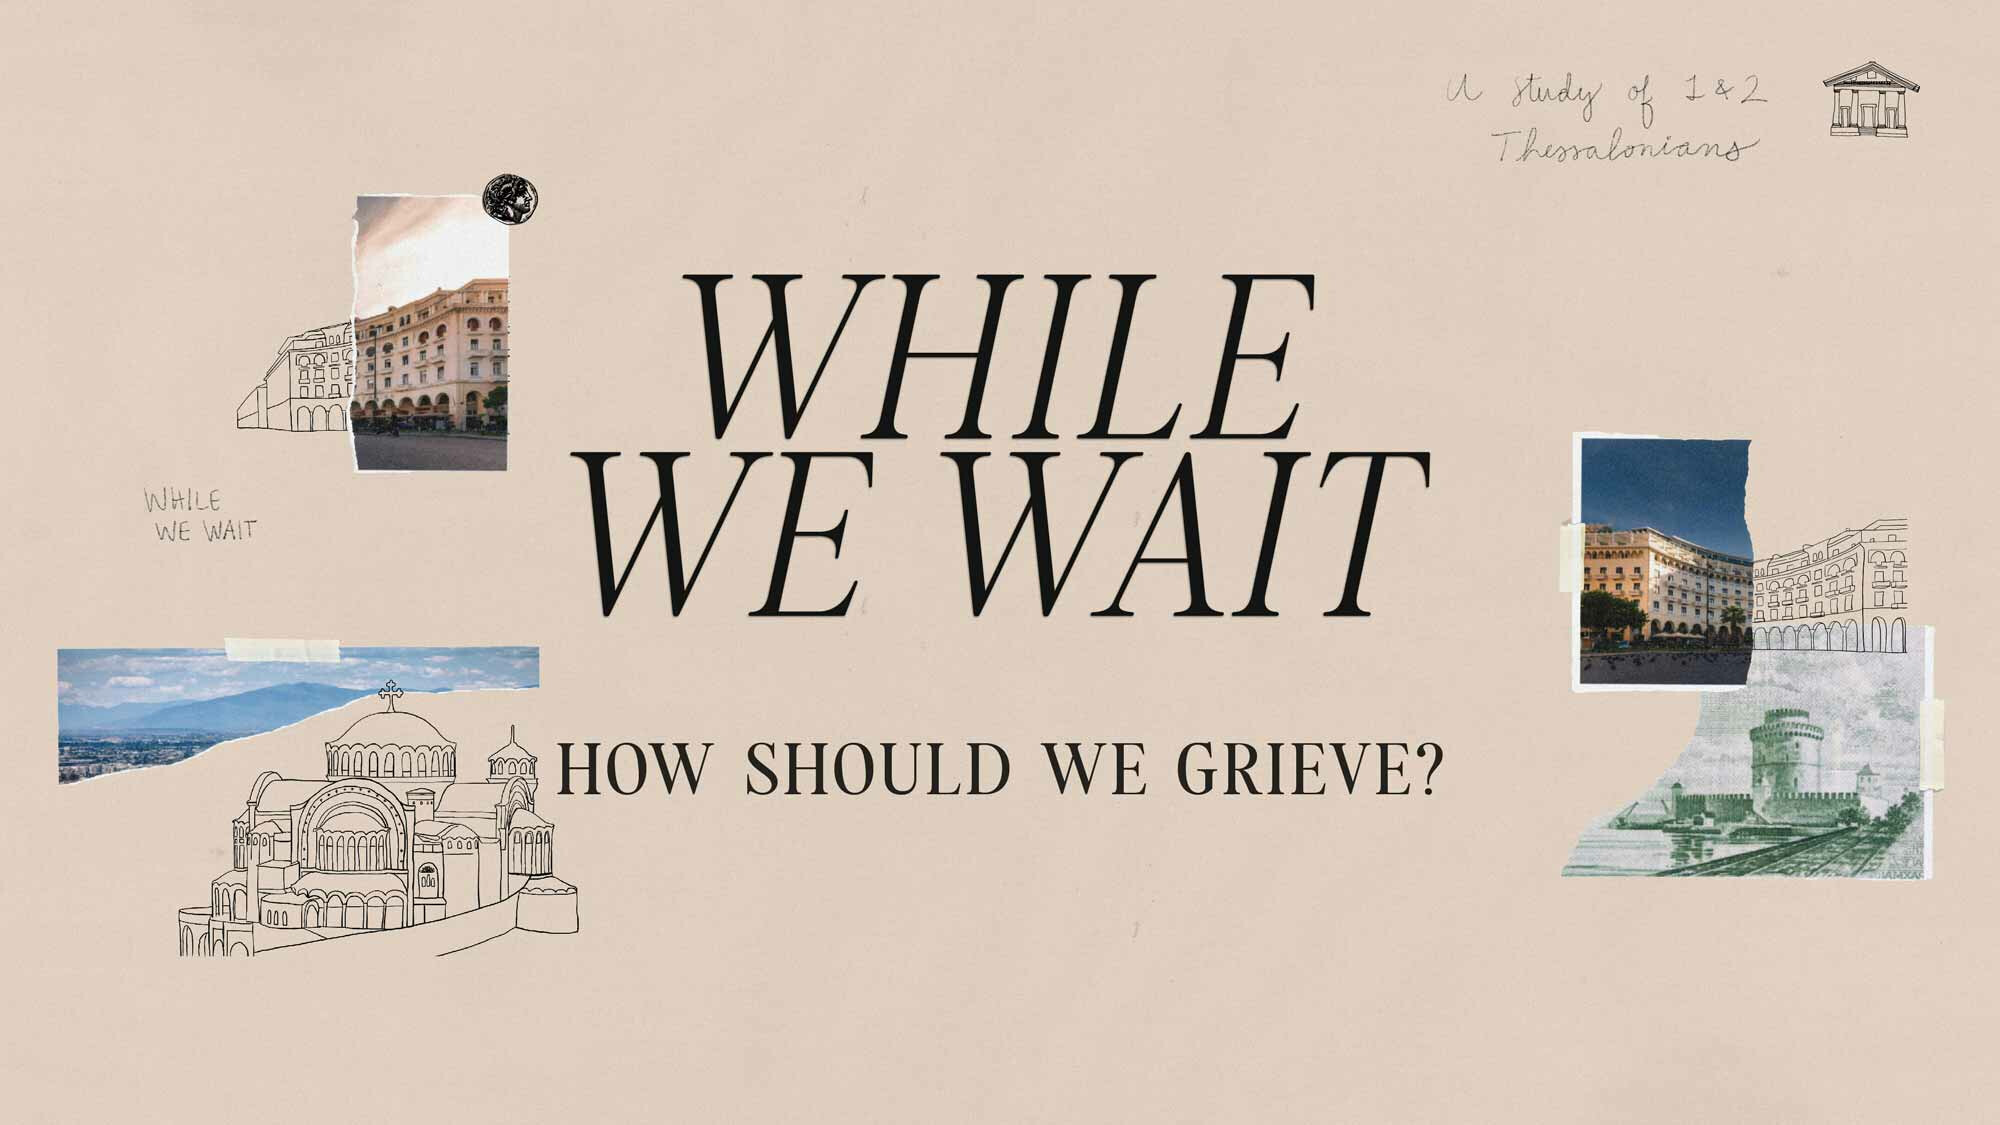 How should we grieve?